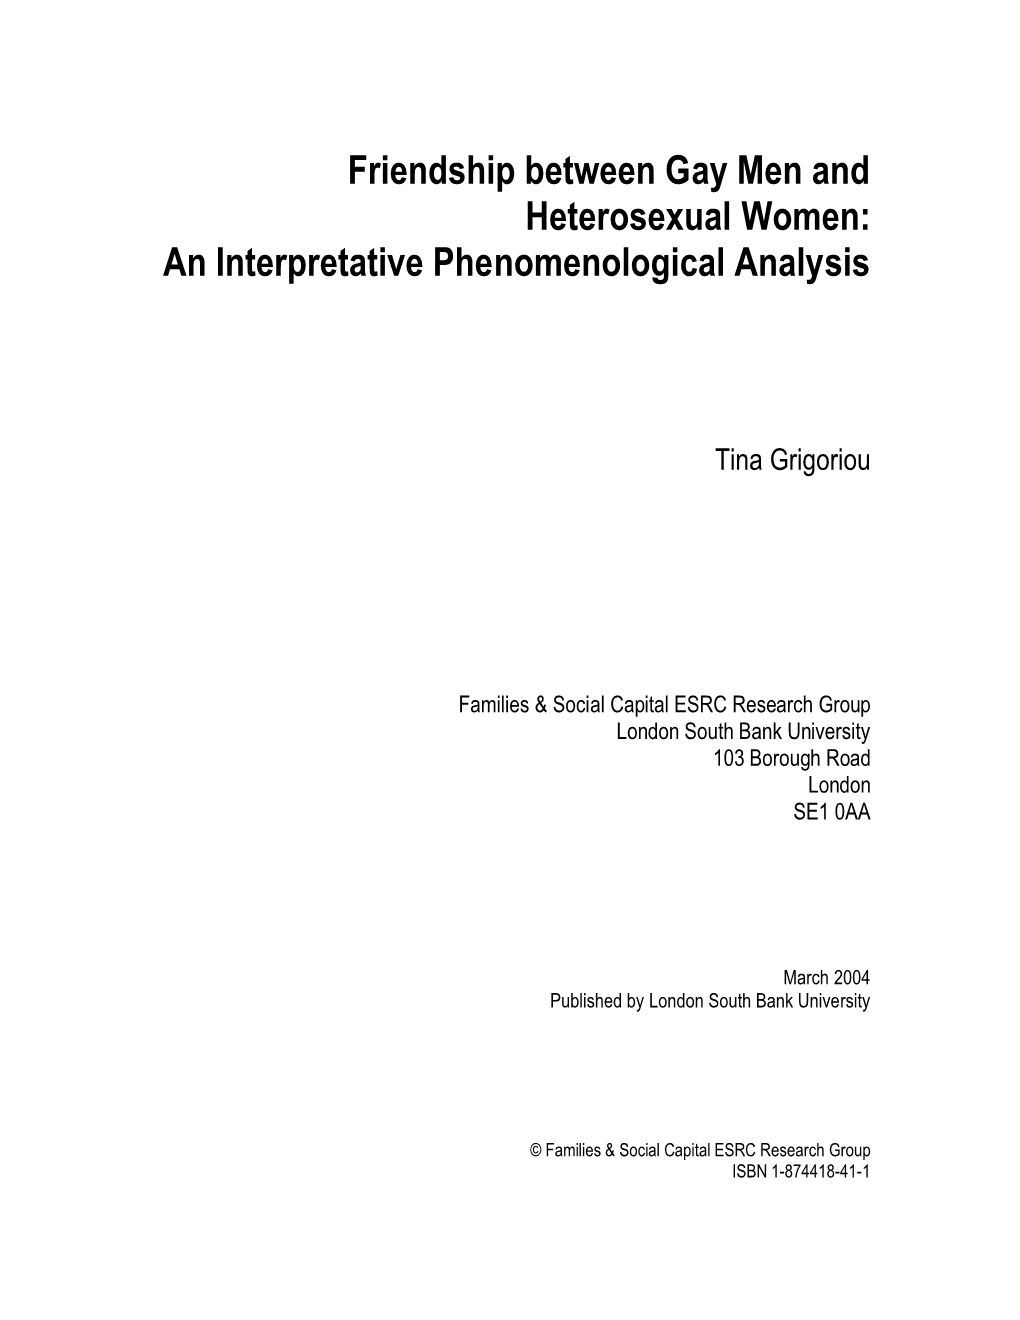 Friendship Between Gay Men and Heterosexual Women: an Interpretative Phenomenological Analysis